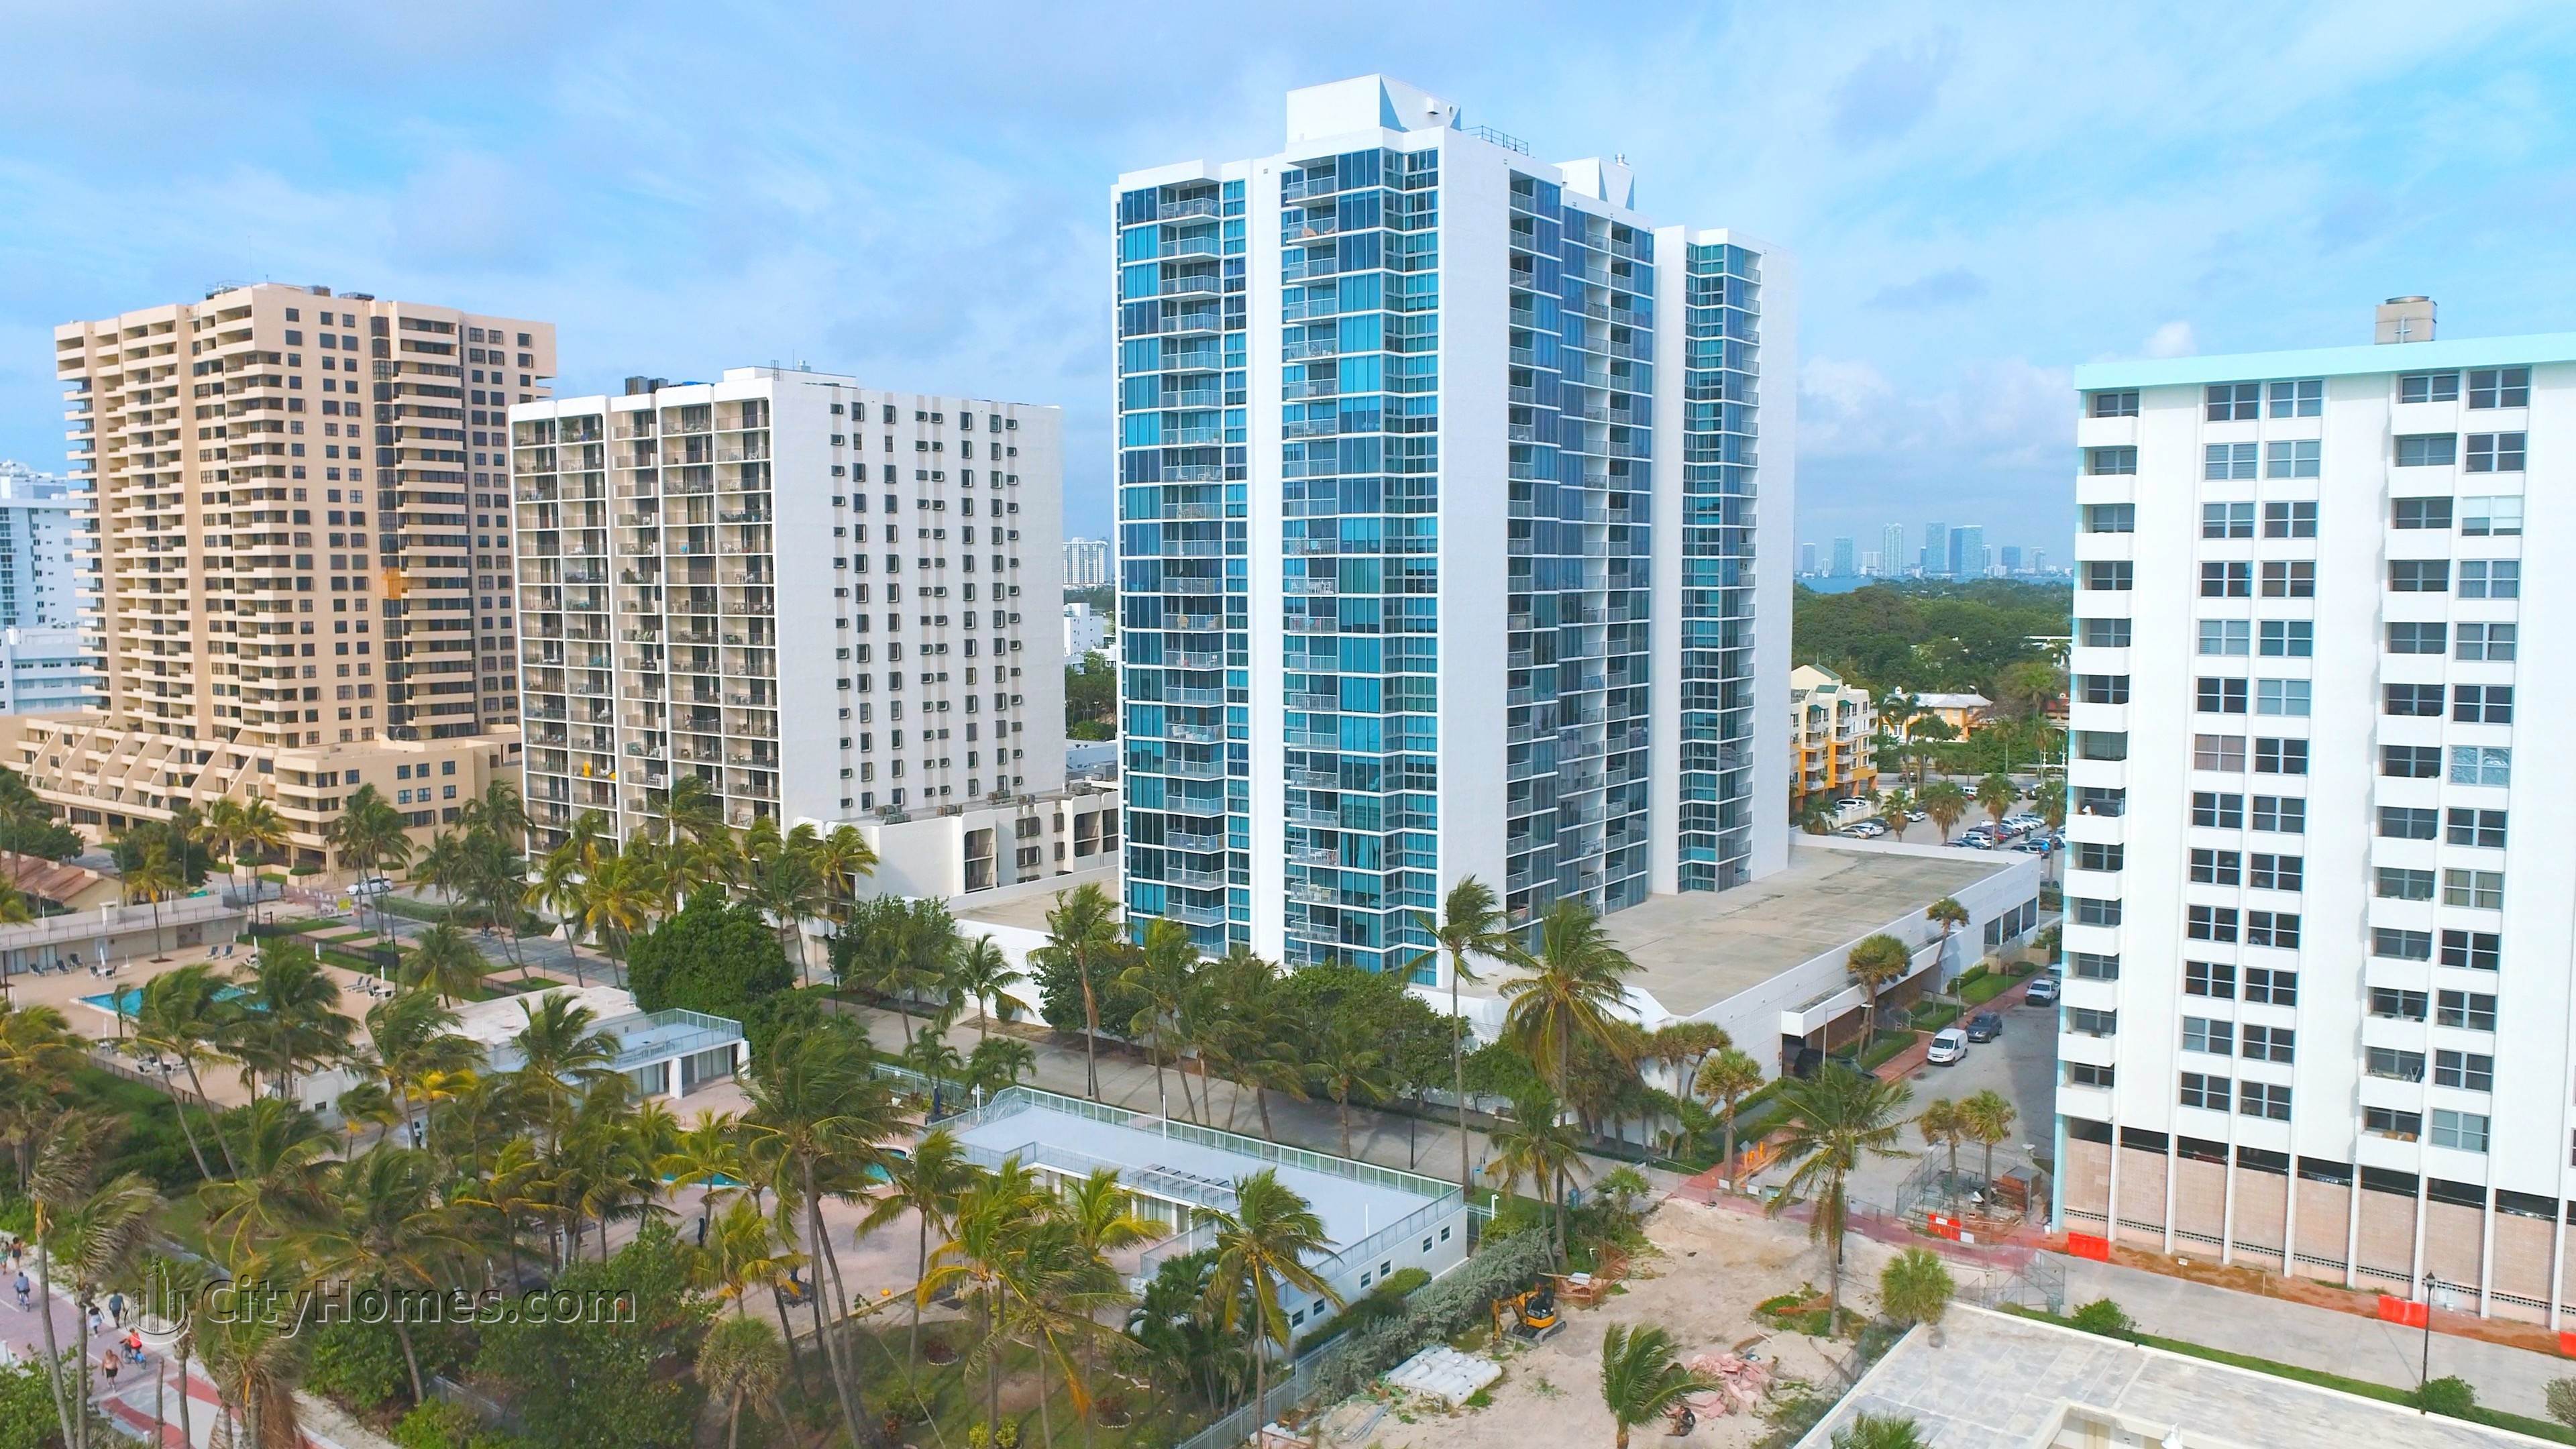 5. MIRASOL OCEAN TOWERS building at 2655 Collins Avenue, Mid Beach, Miami Beach, FL 33140